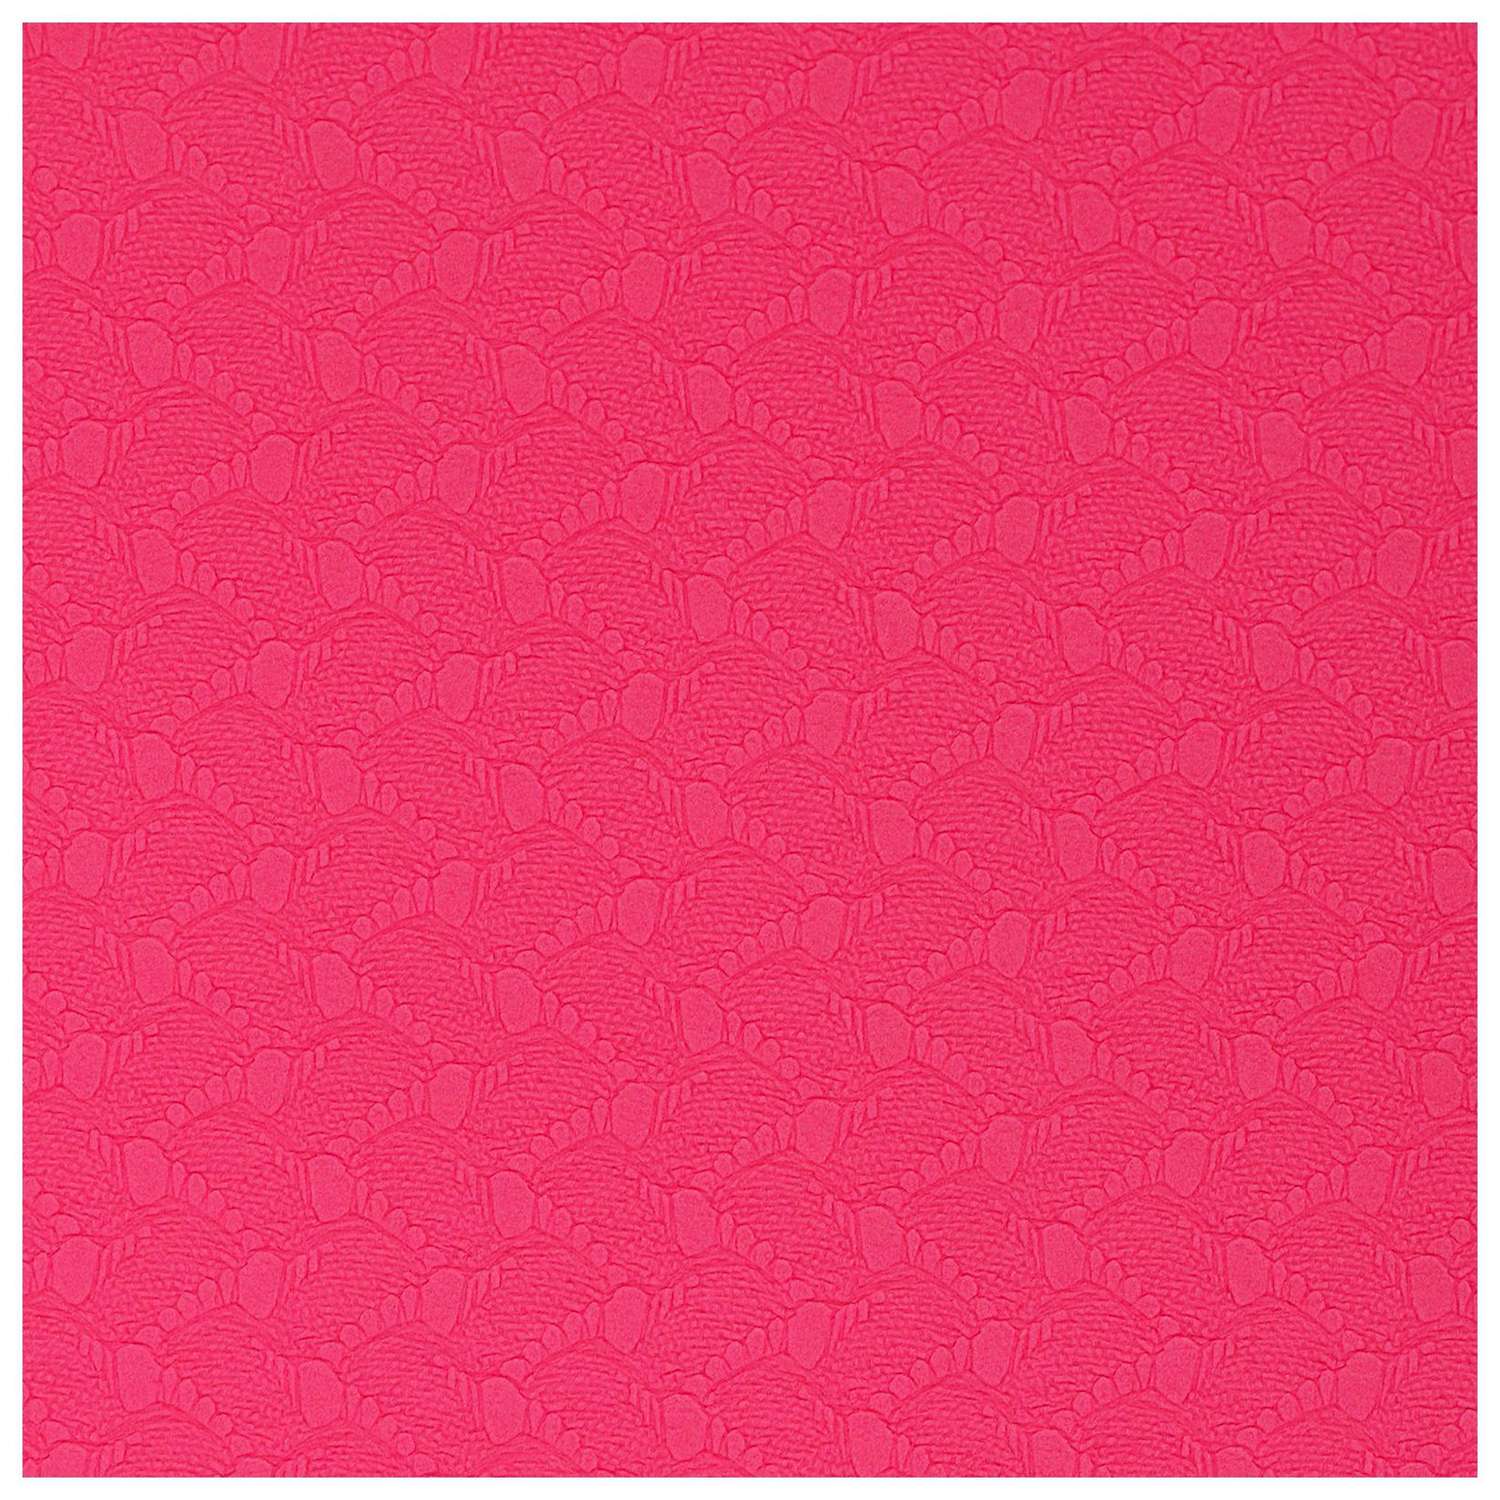 Коврик Sangh 183 х 61 х 0.6 см. двухцветный. цвет розовый - фото 5